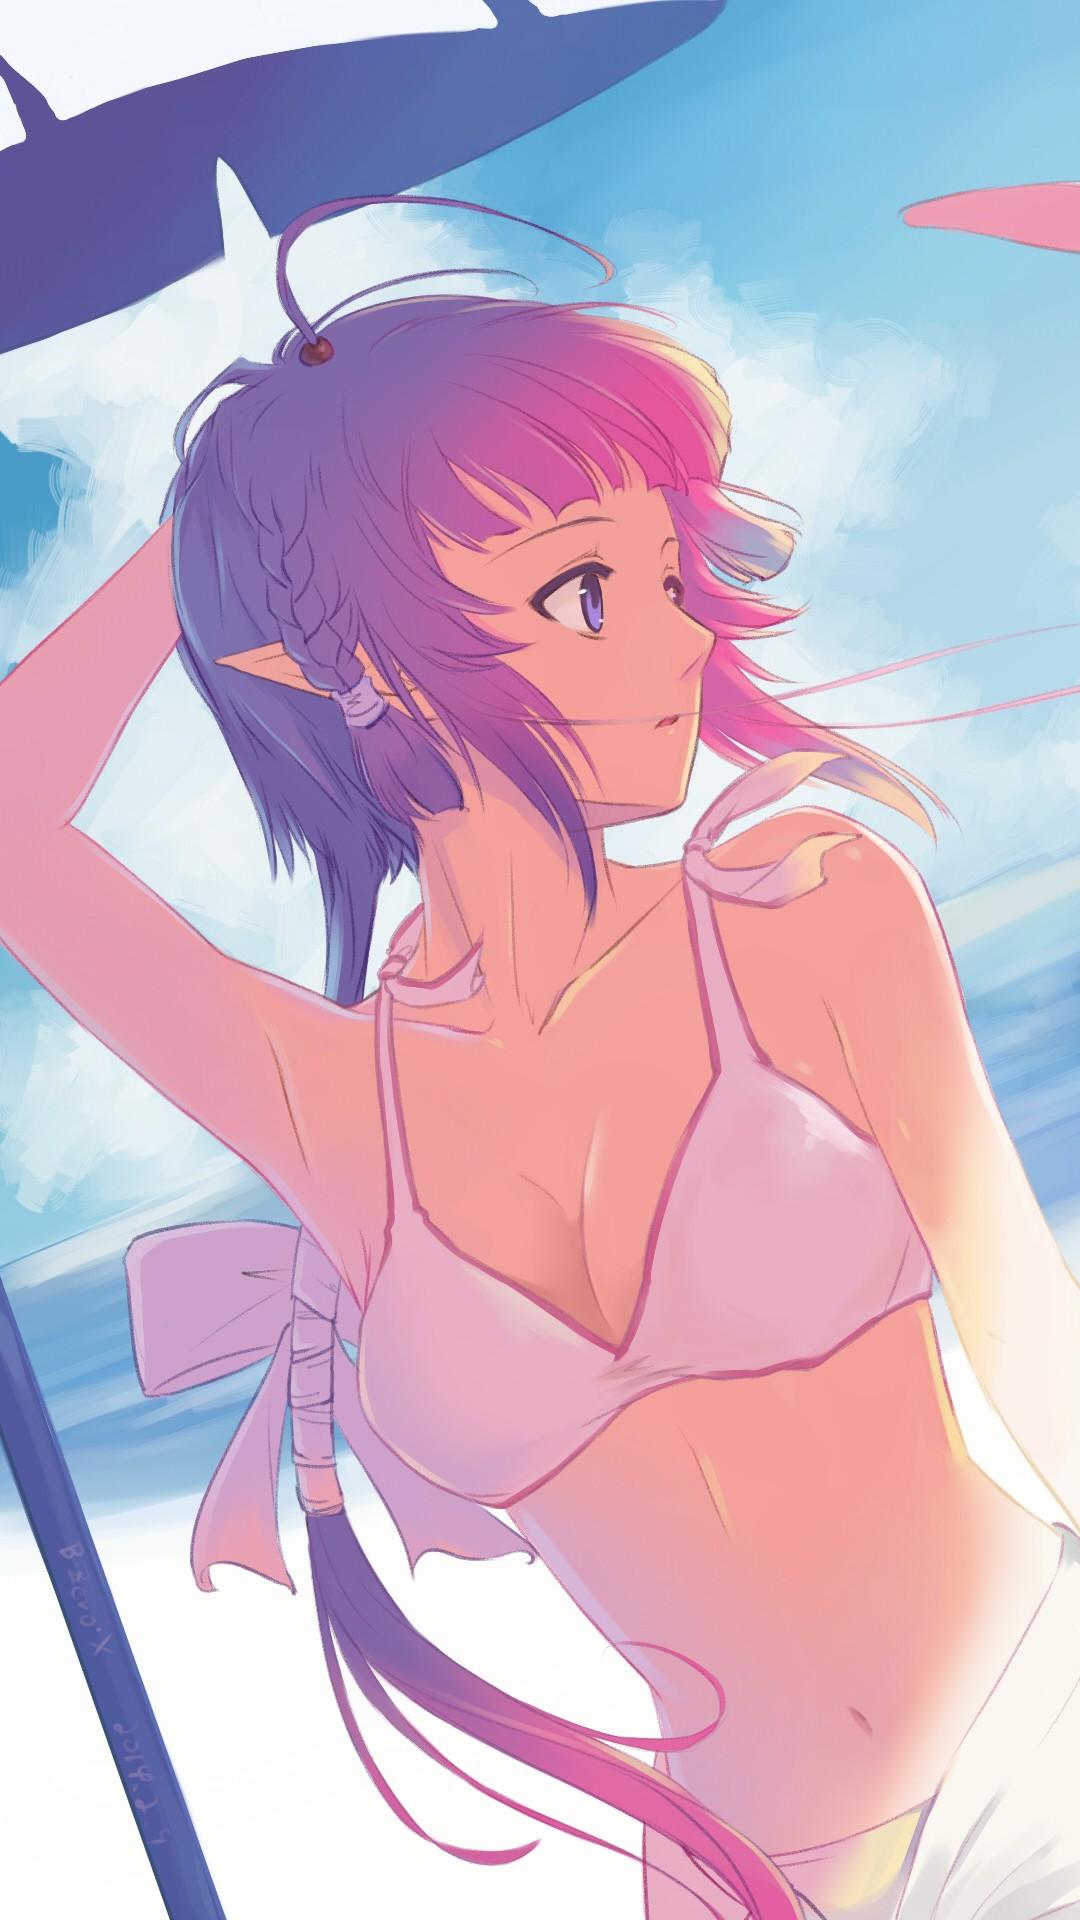 Anime Girl on Beach Android Wallpaper Wallpaper